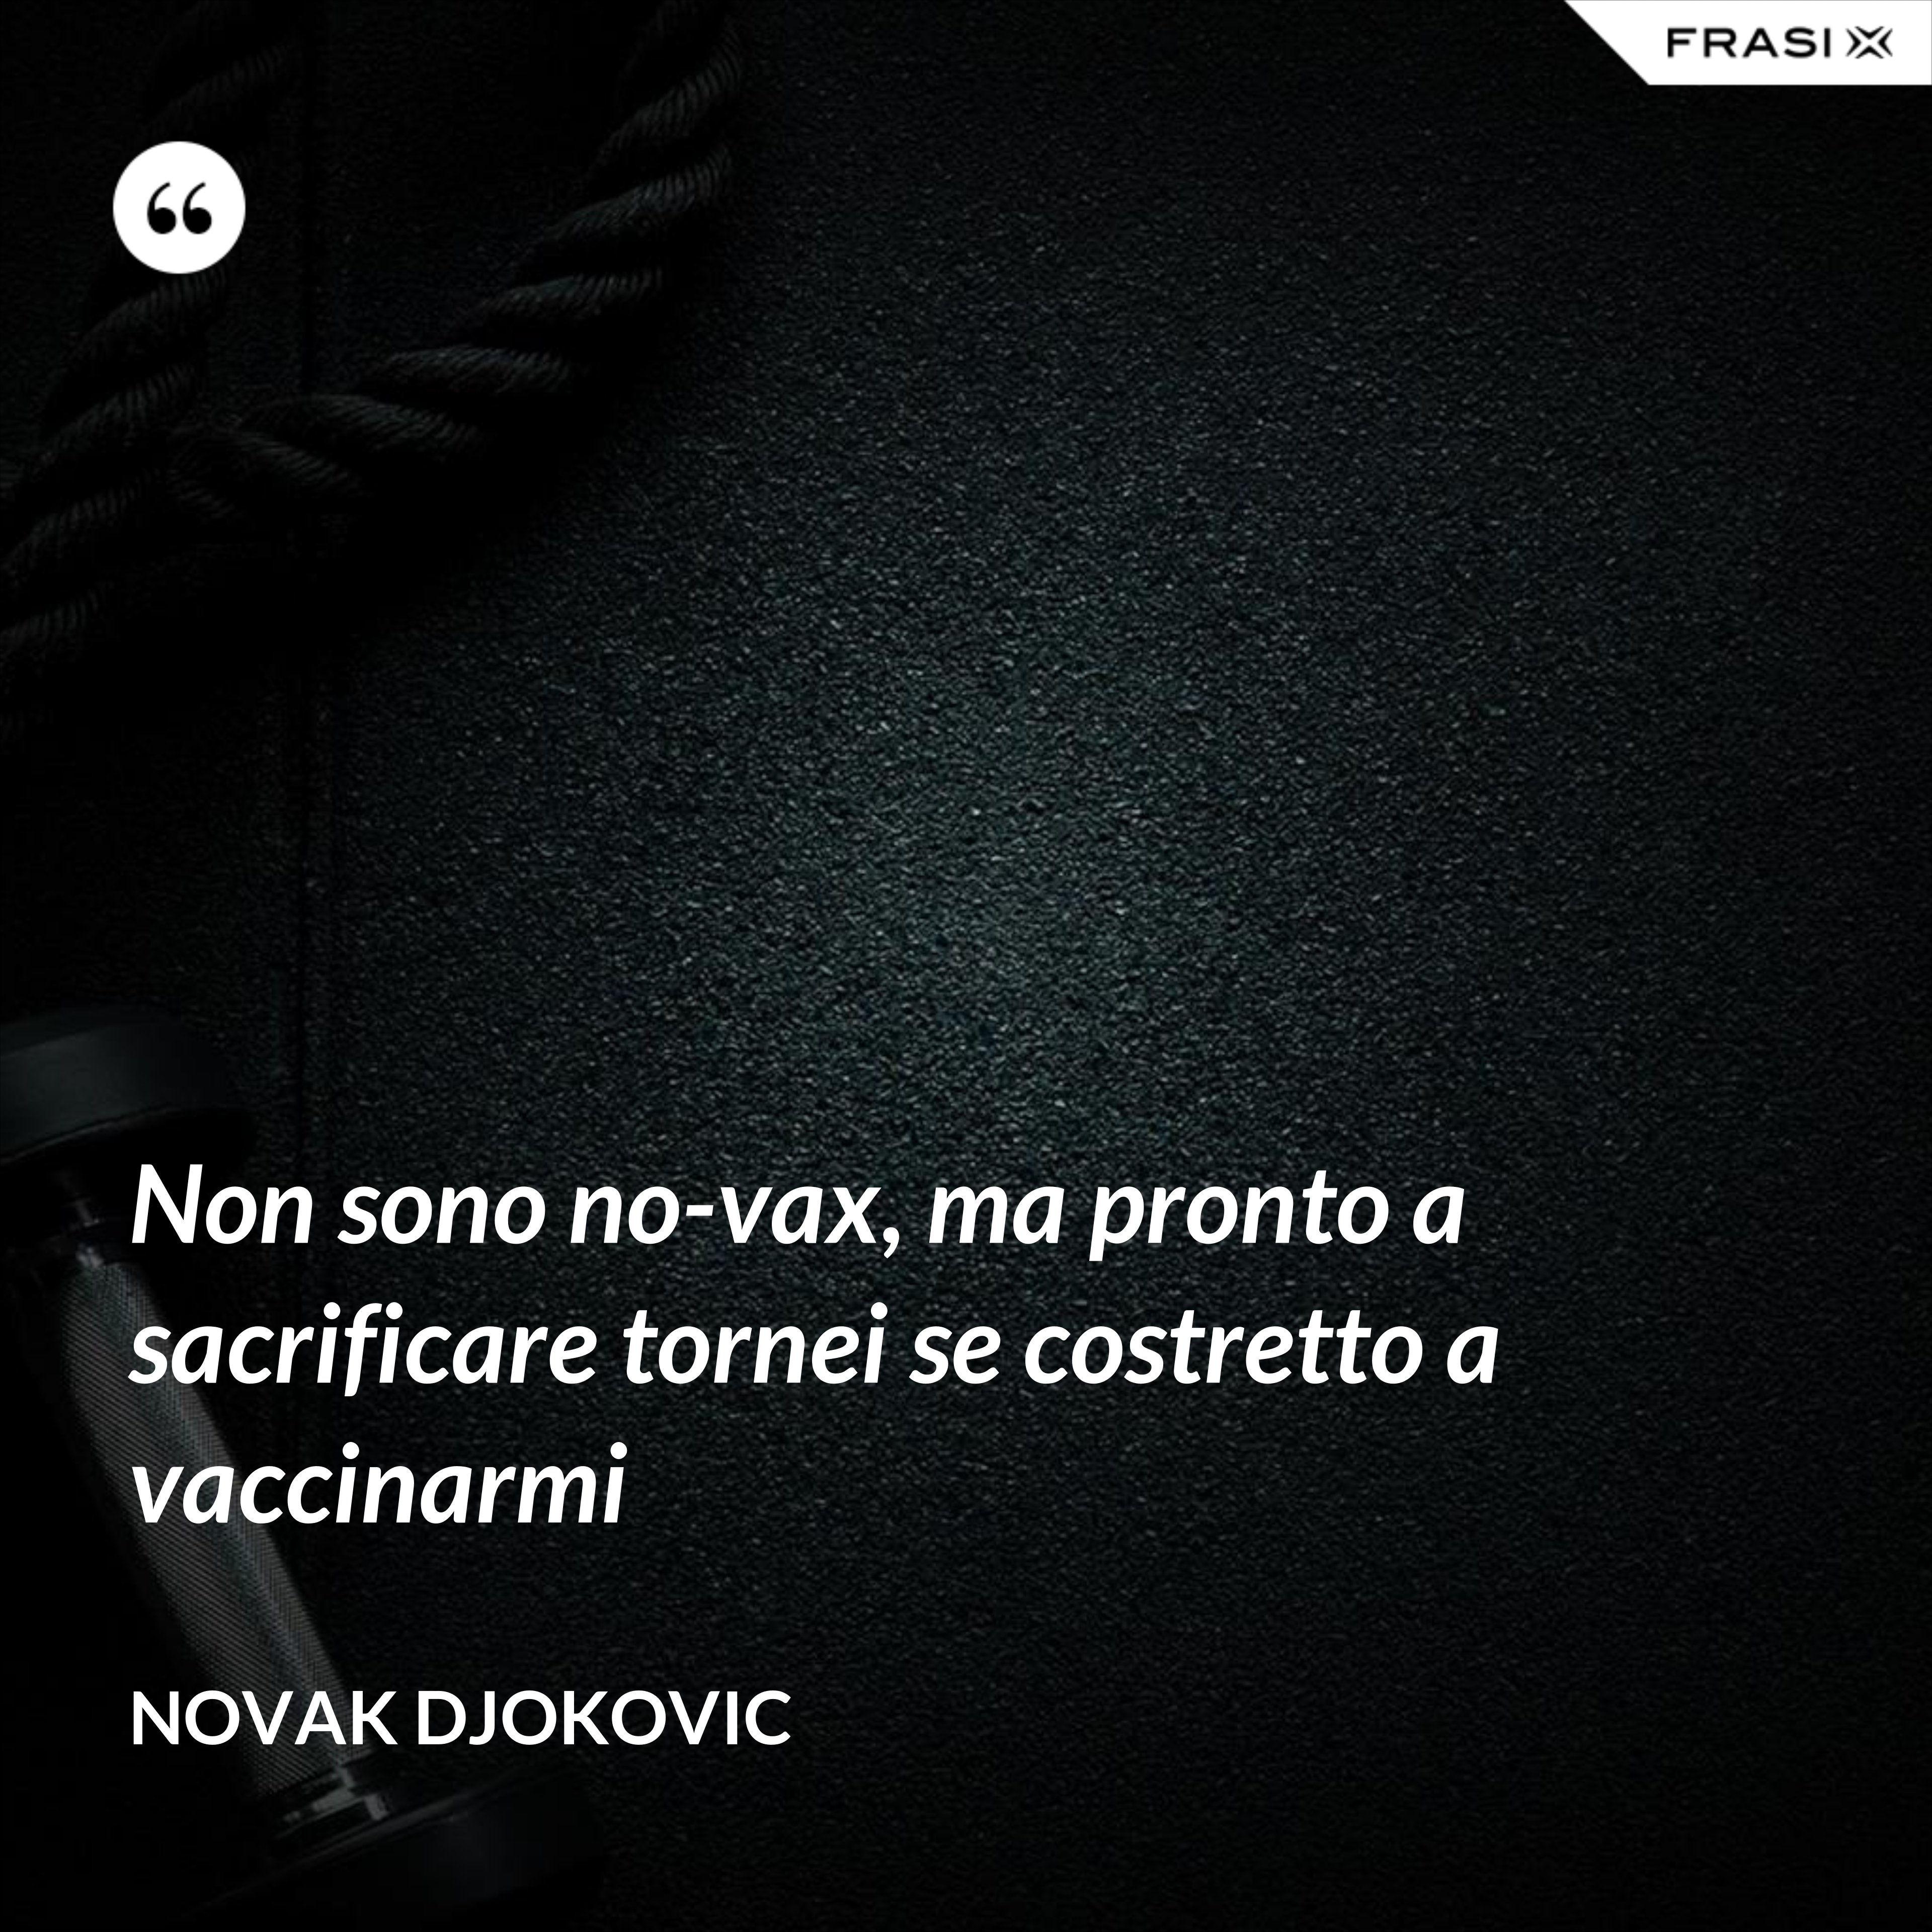 Non sono no-vax, ma pronto a sacrificare tornei se costretto a vaccinarmi - Novak Djokovic